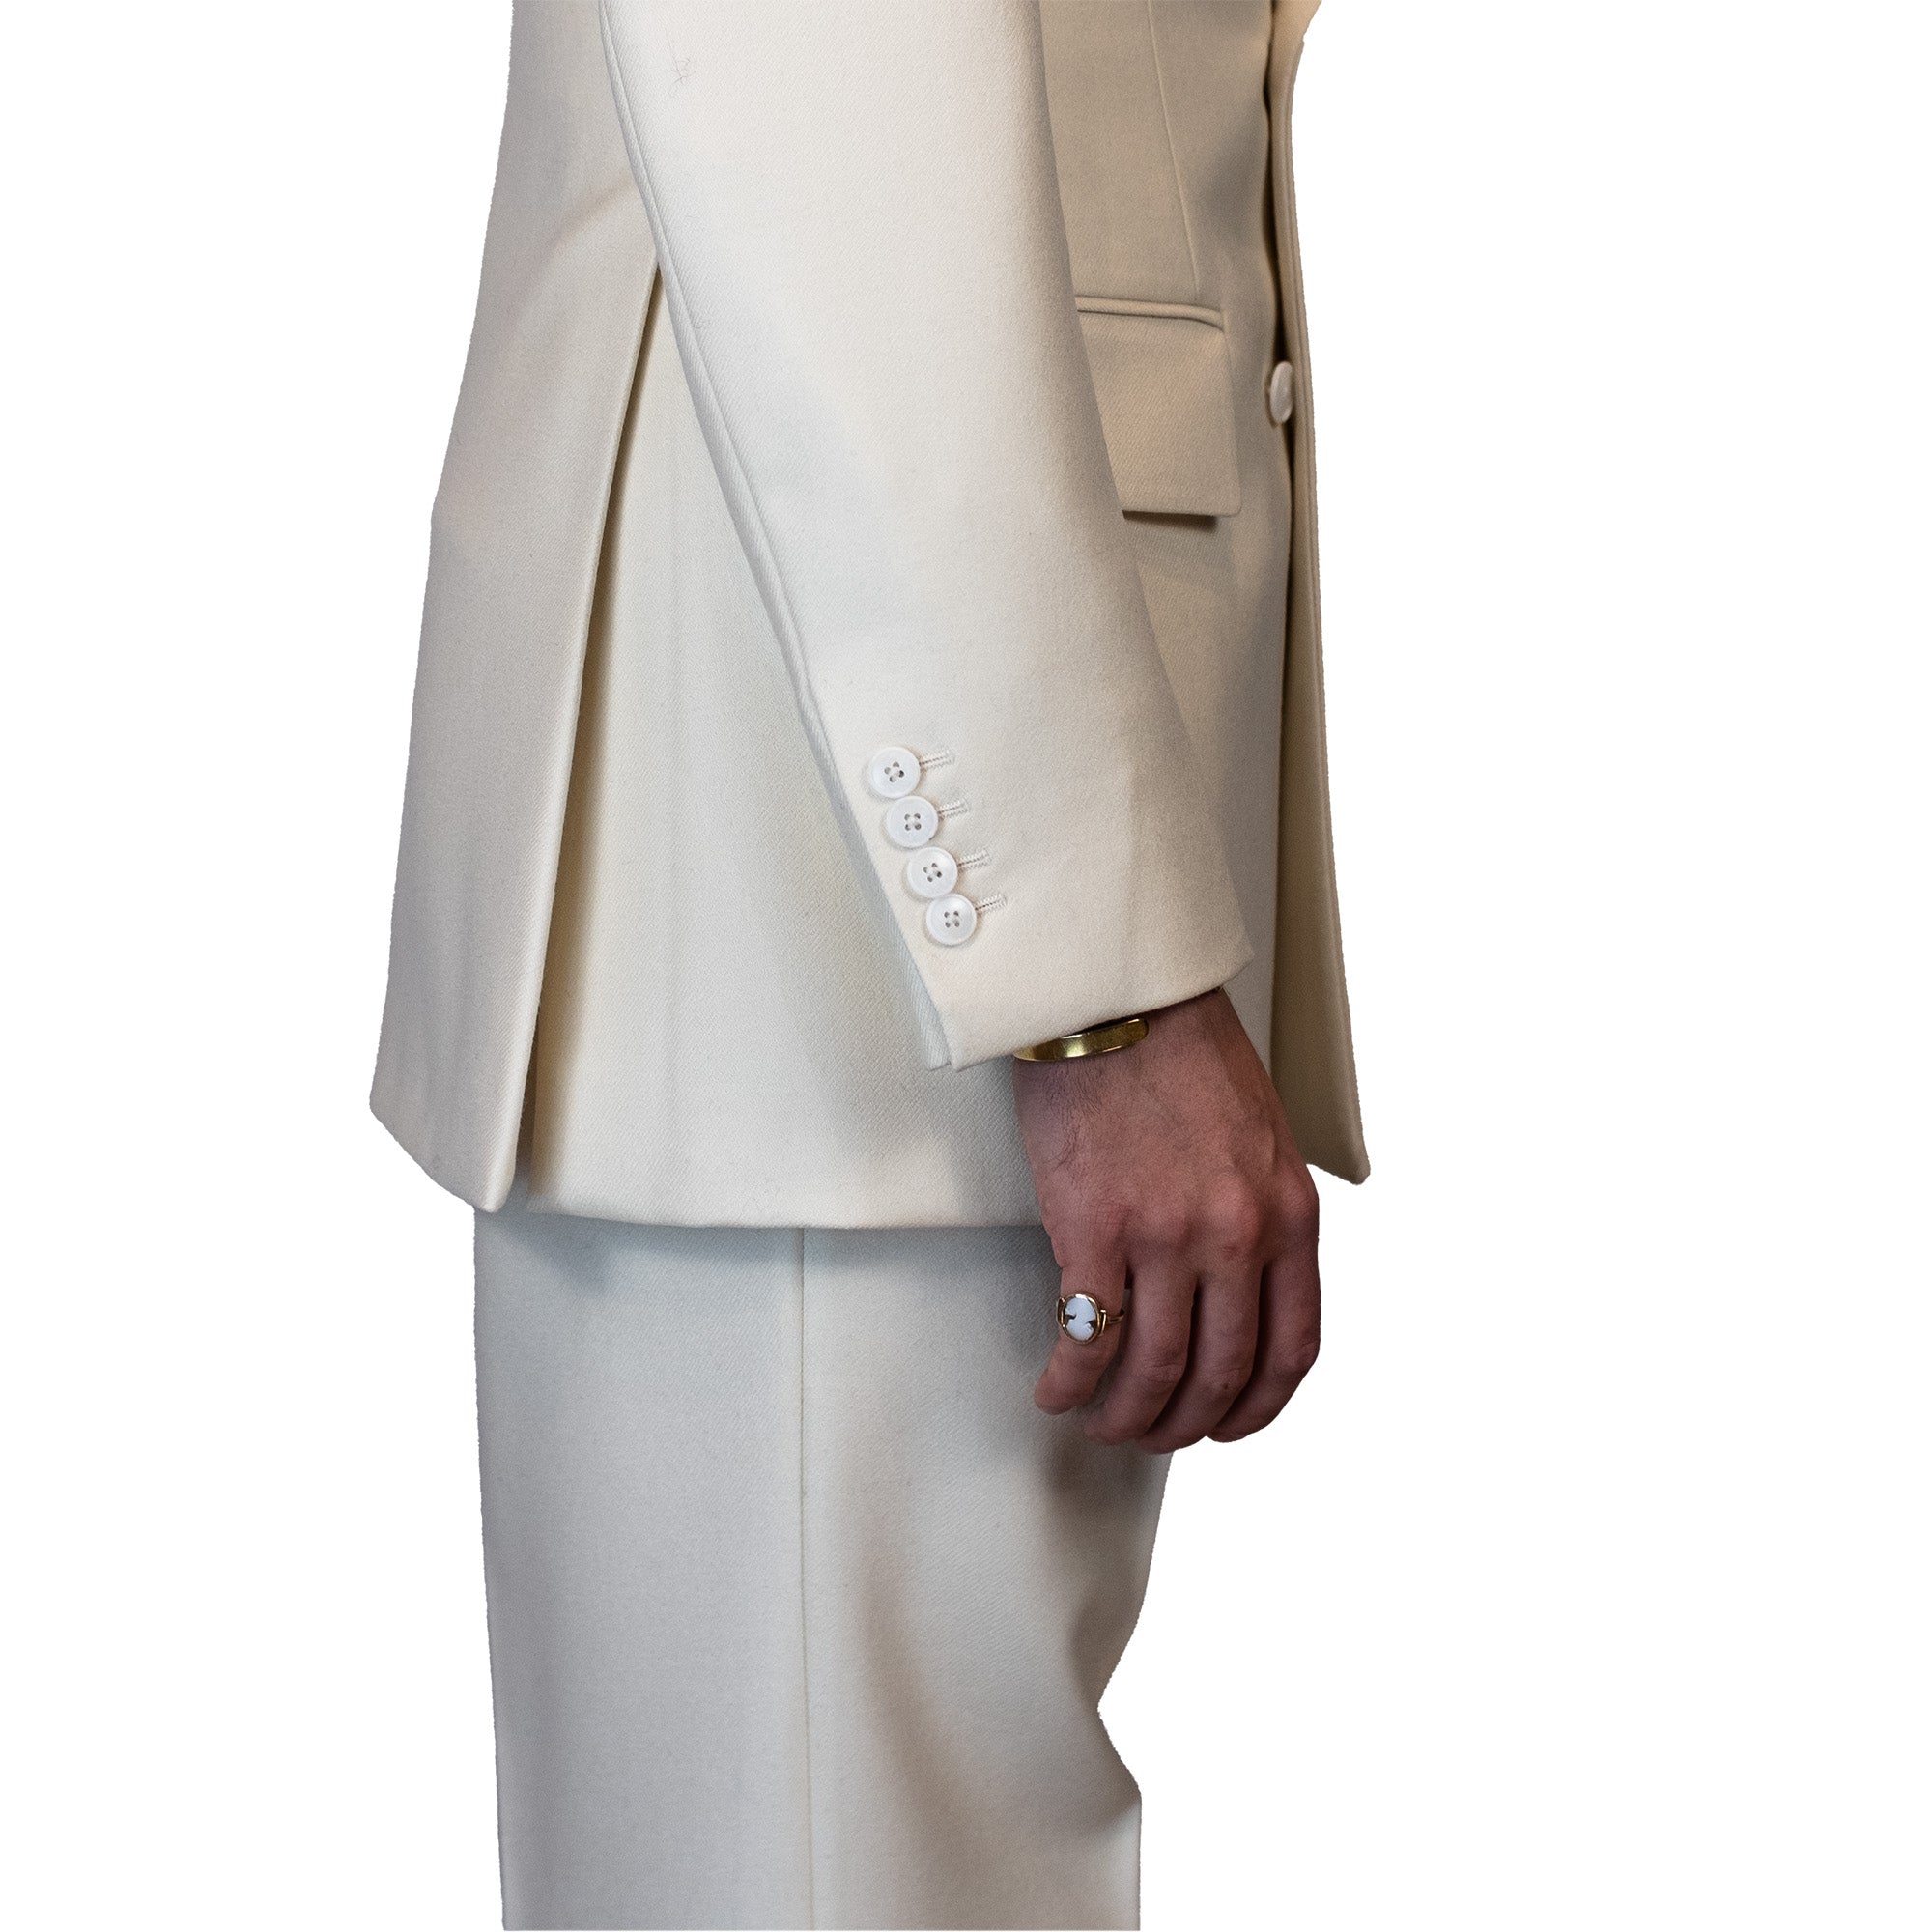 Suit - White Cricket Flannel